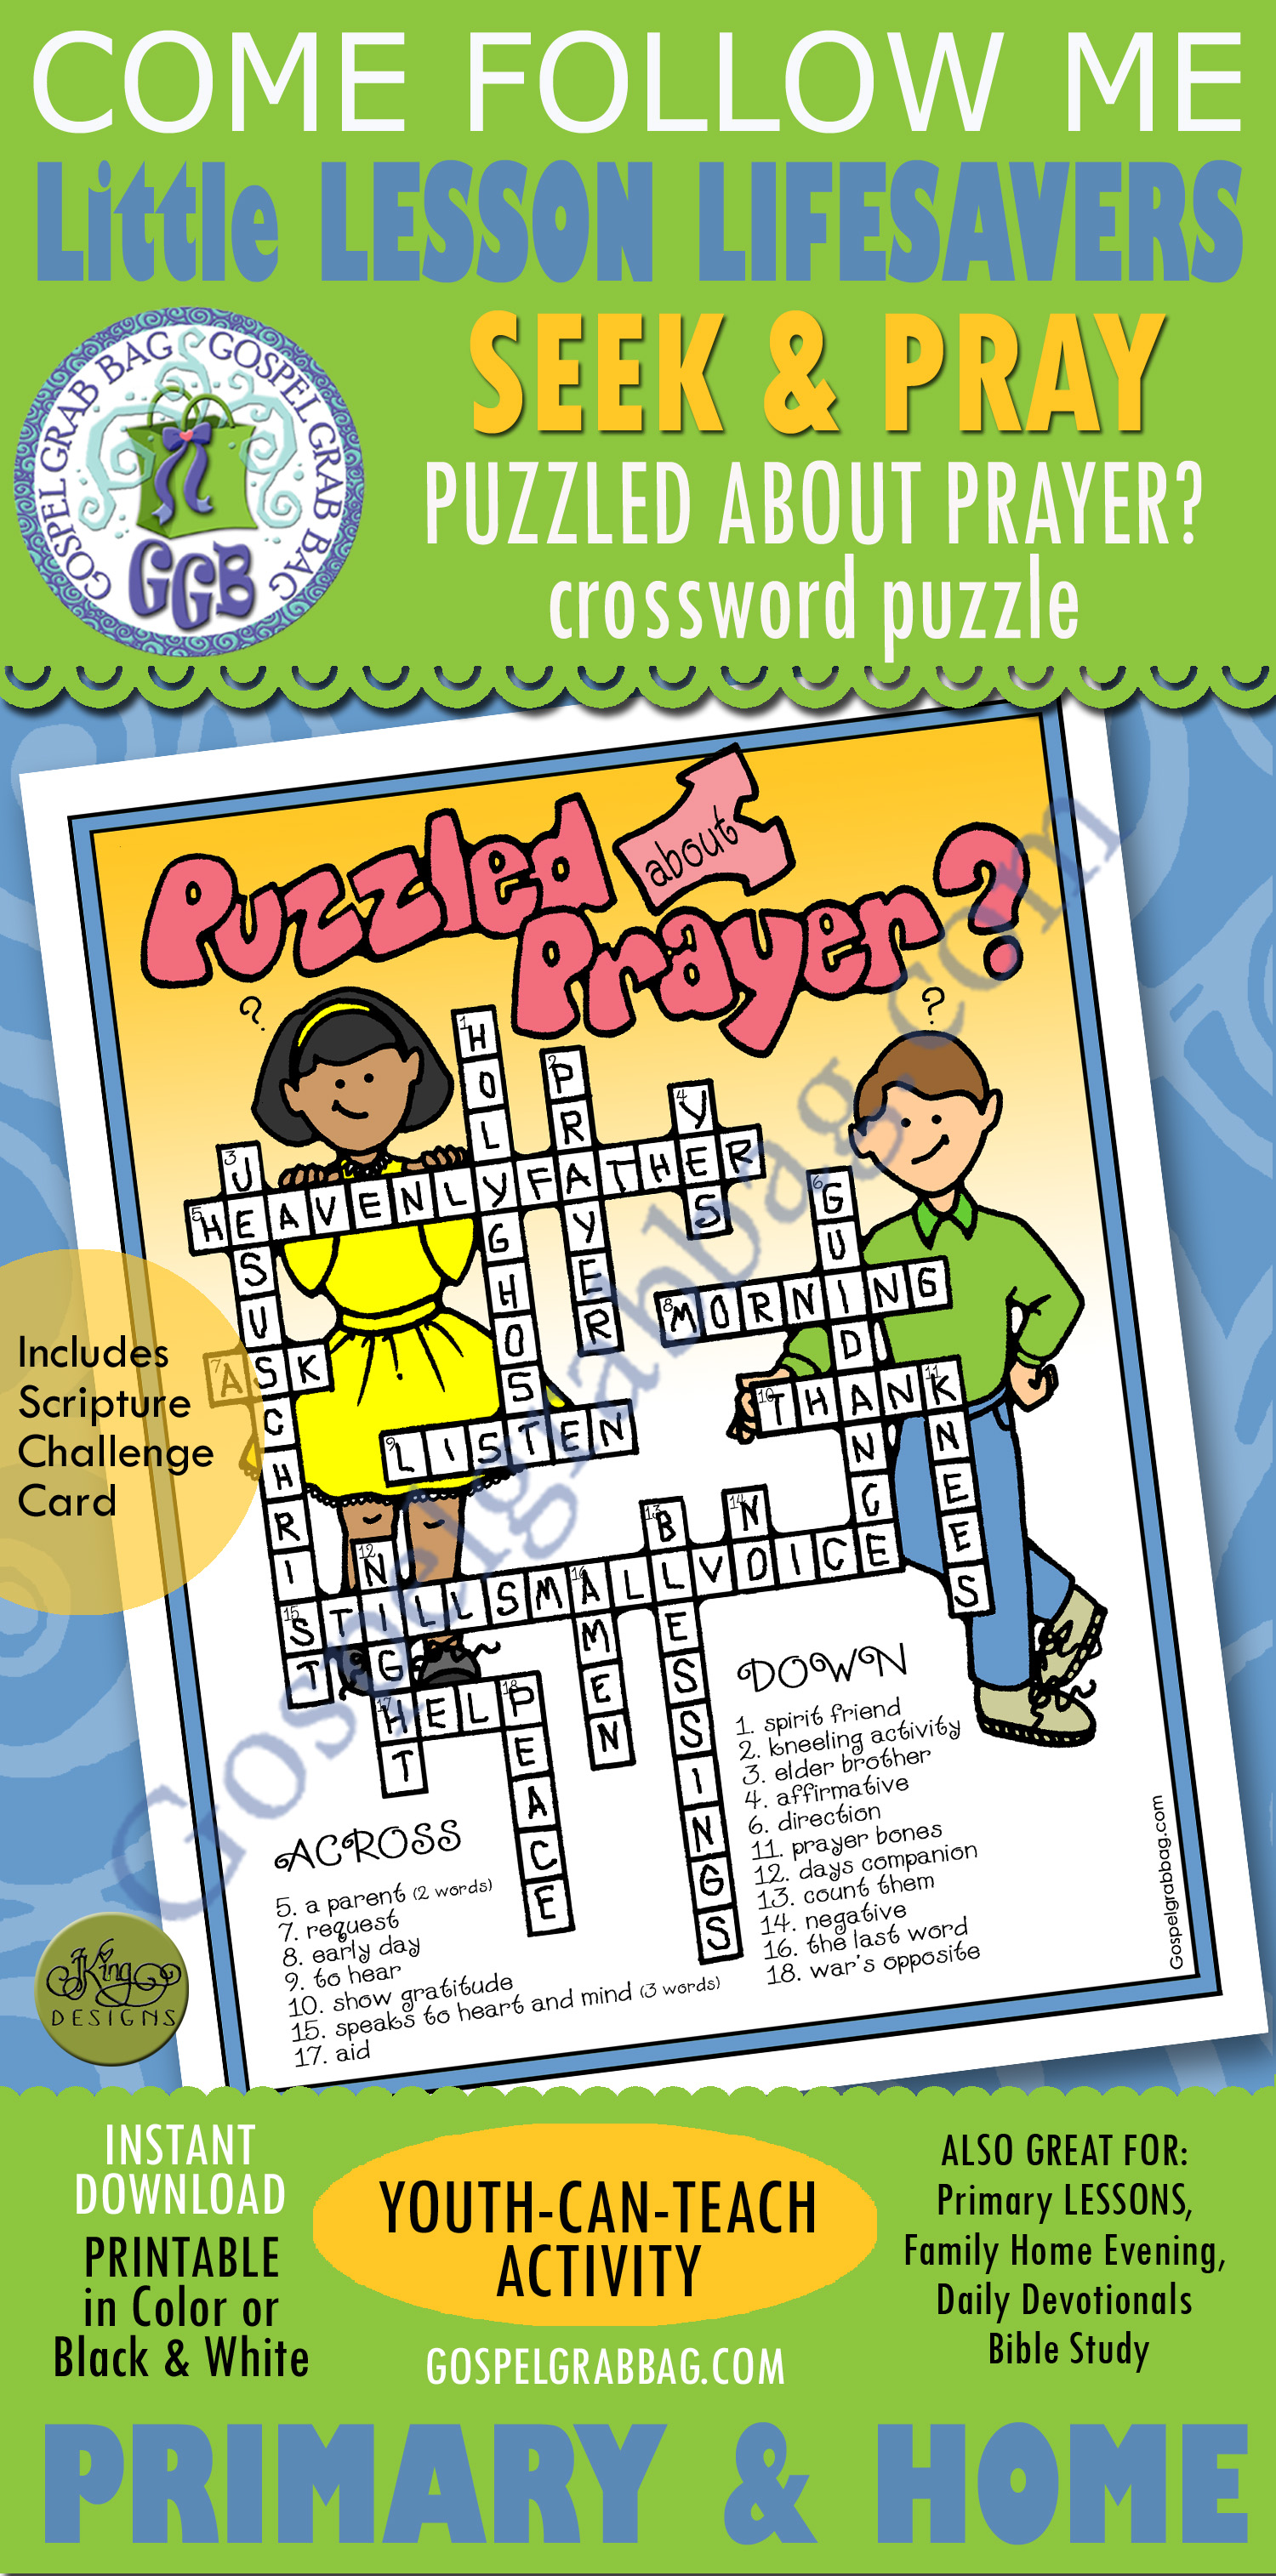 PRAYER Lesson Lifesaver Activity: Puzzled About Prayer (crossword